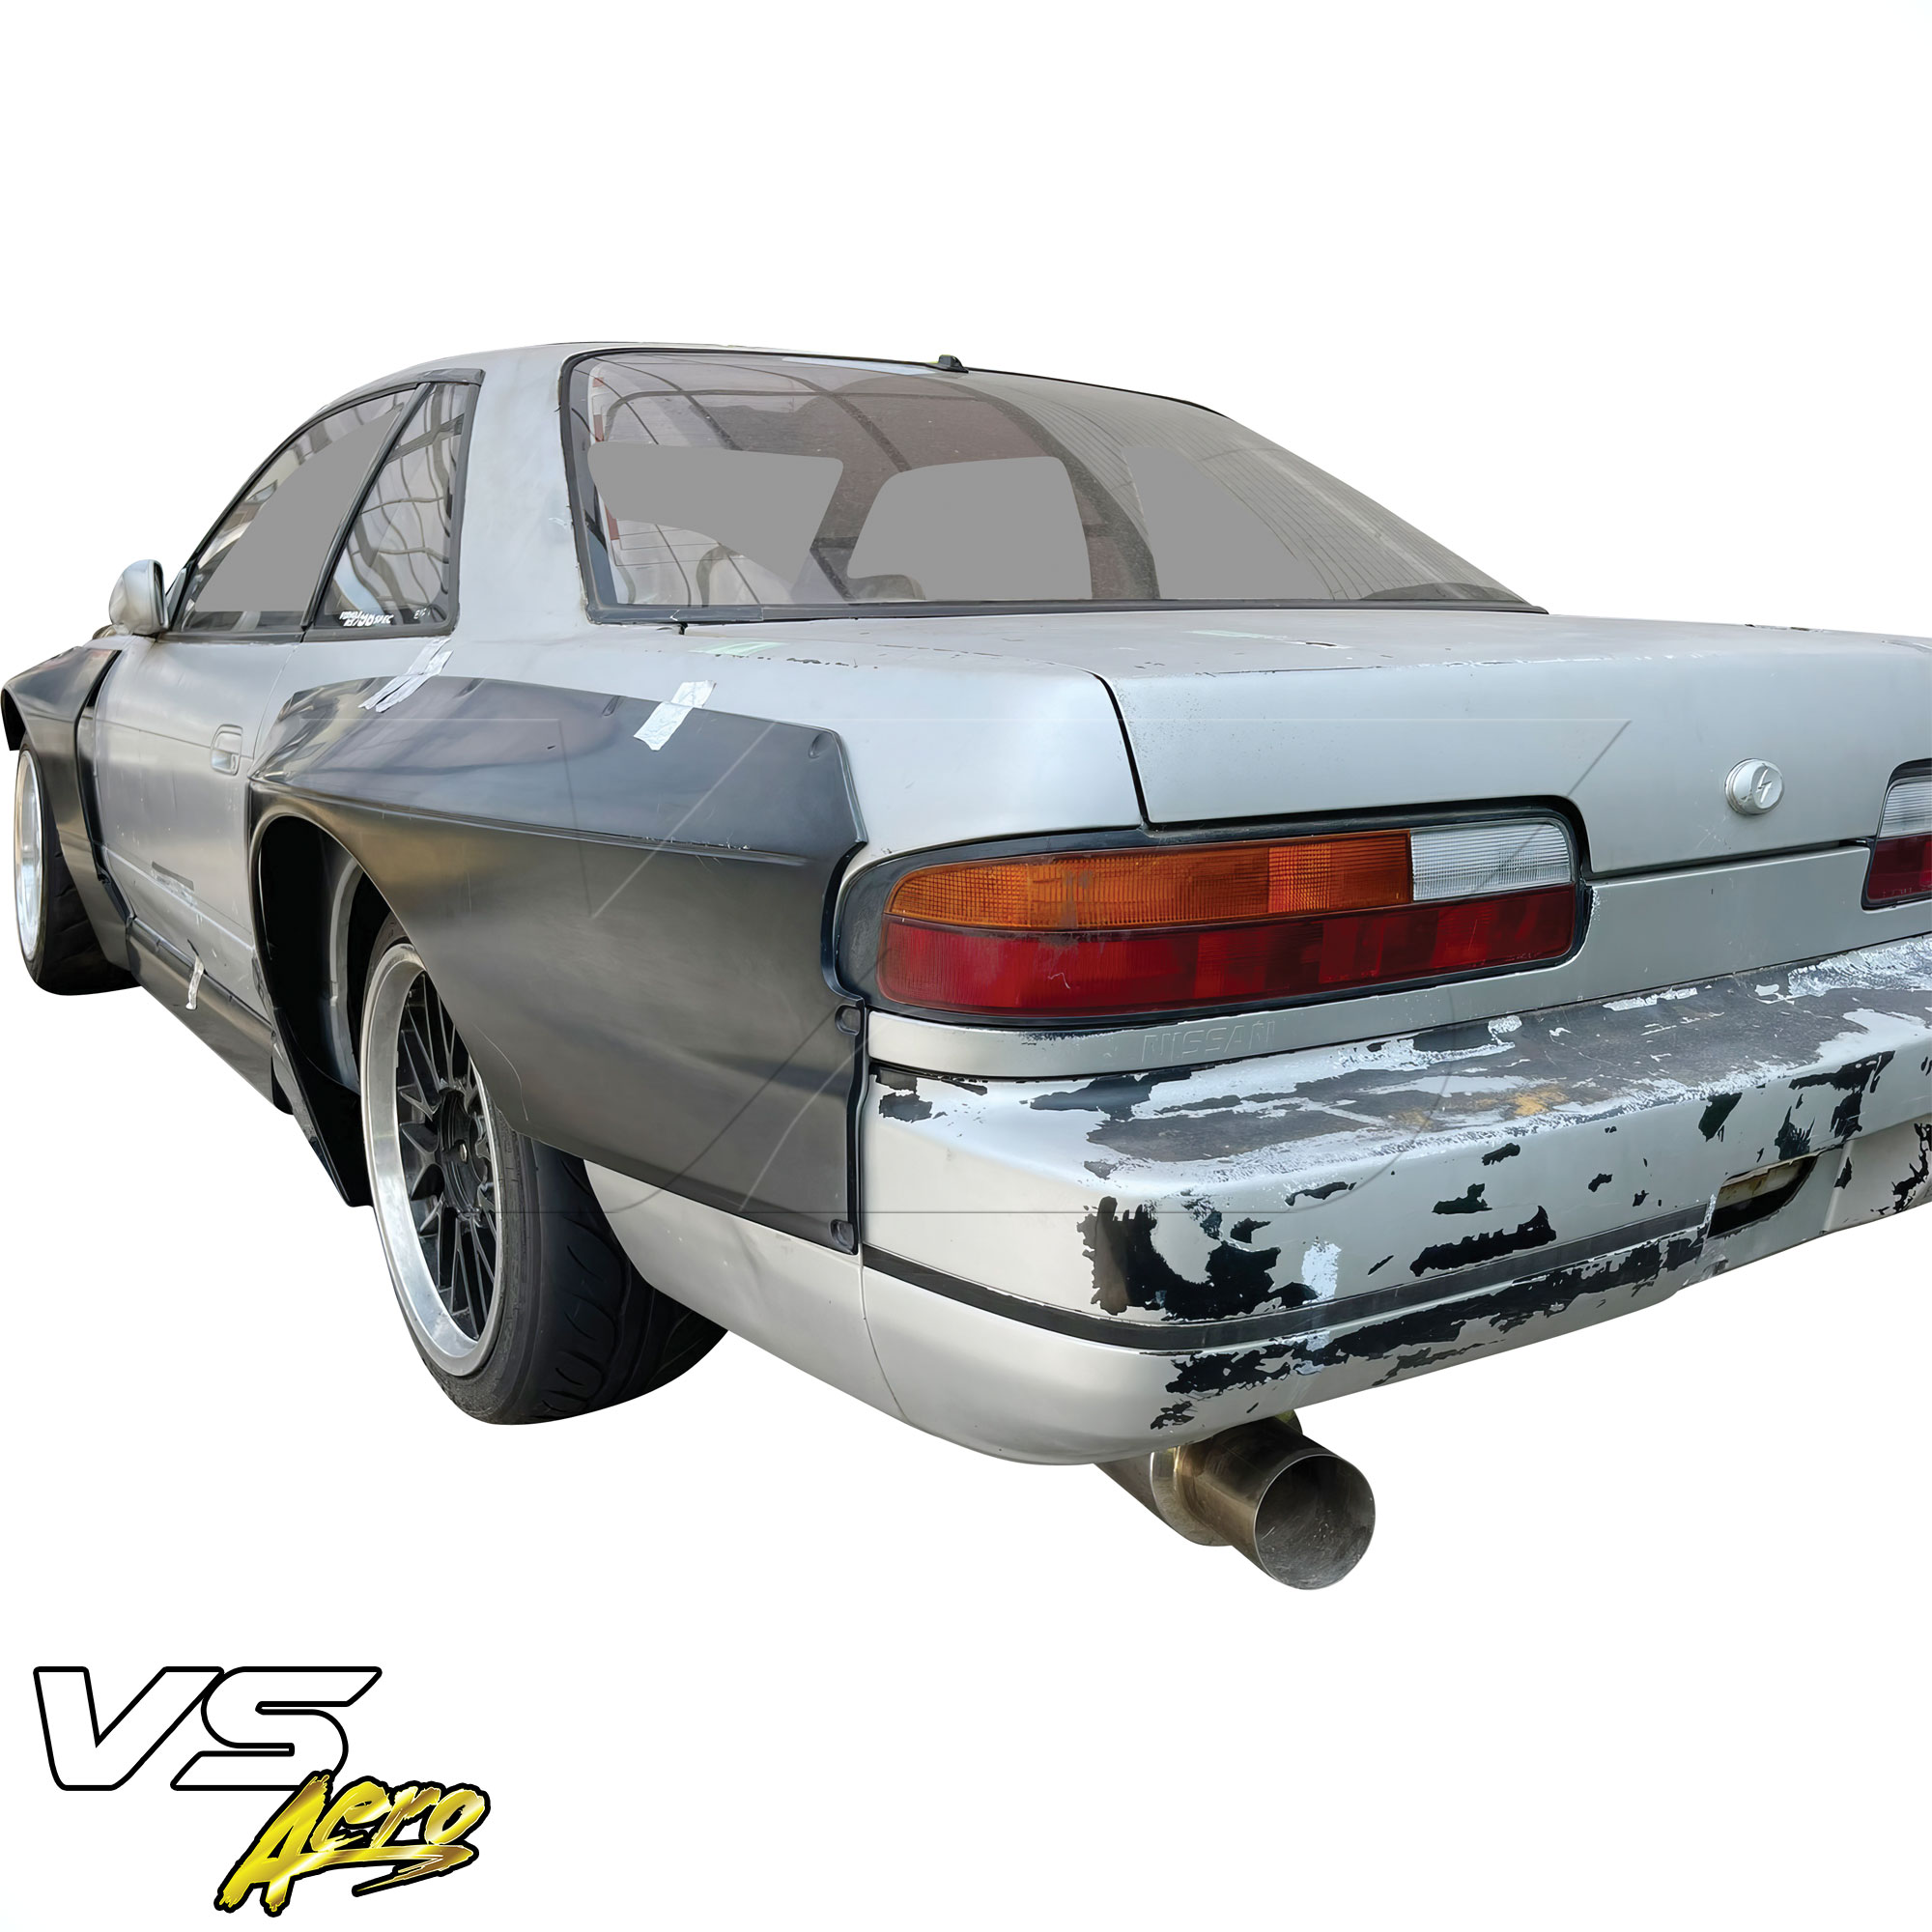 VSaero FRP TKYO v3 Wide Body 110mm Fenders (rear) > Nissan Silvia S13 1989-1994 > 2dr Coupe - Image 19